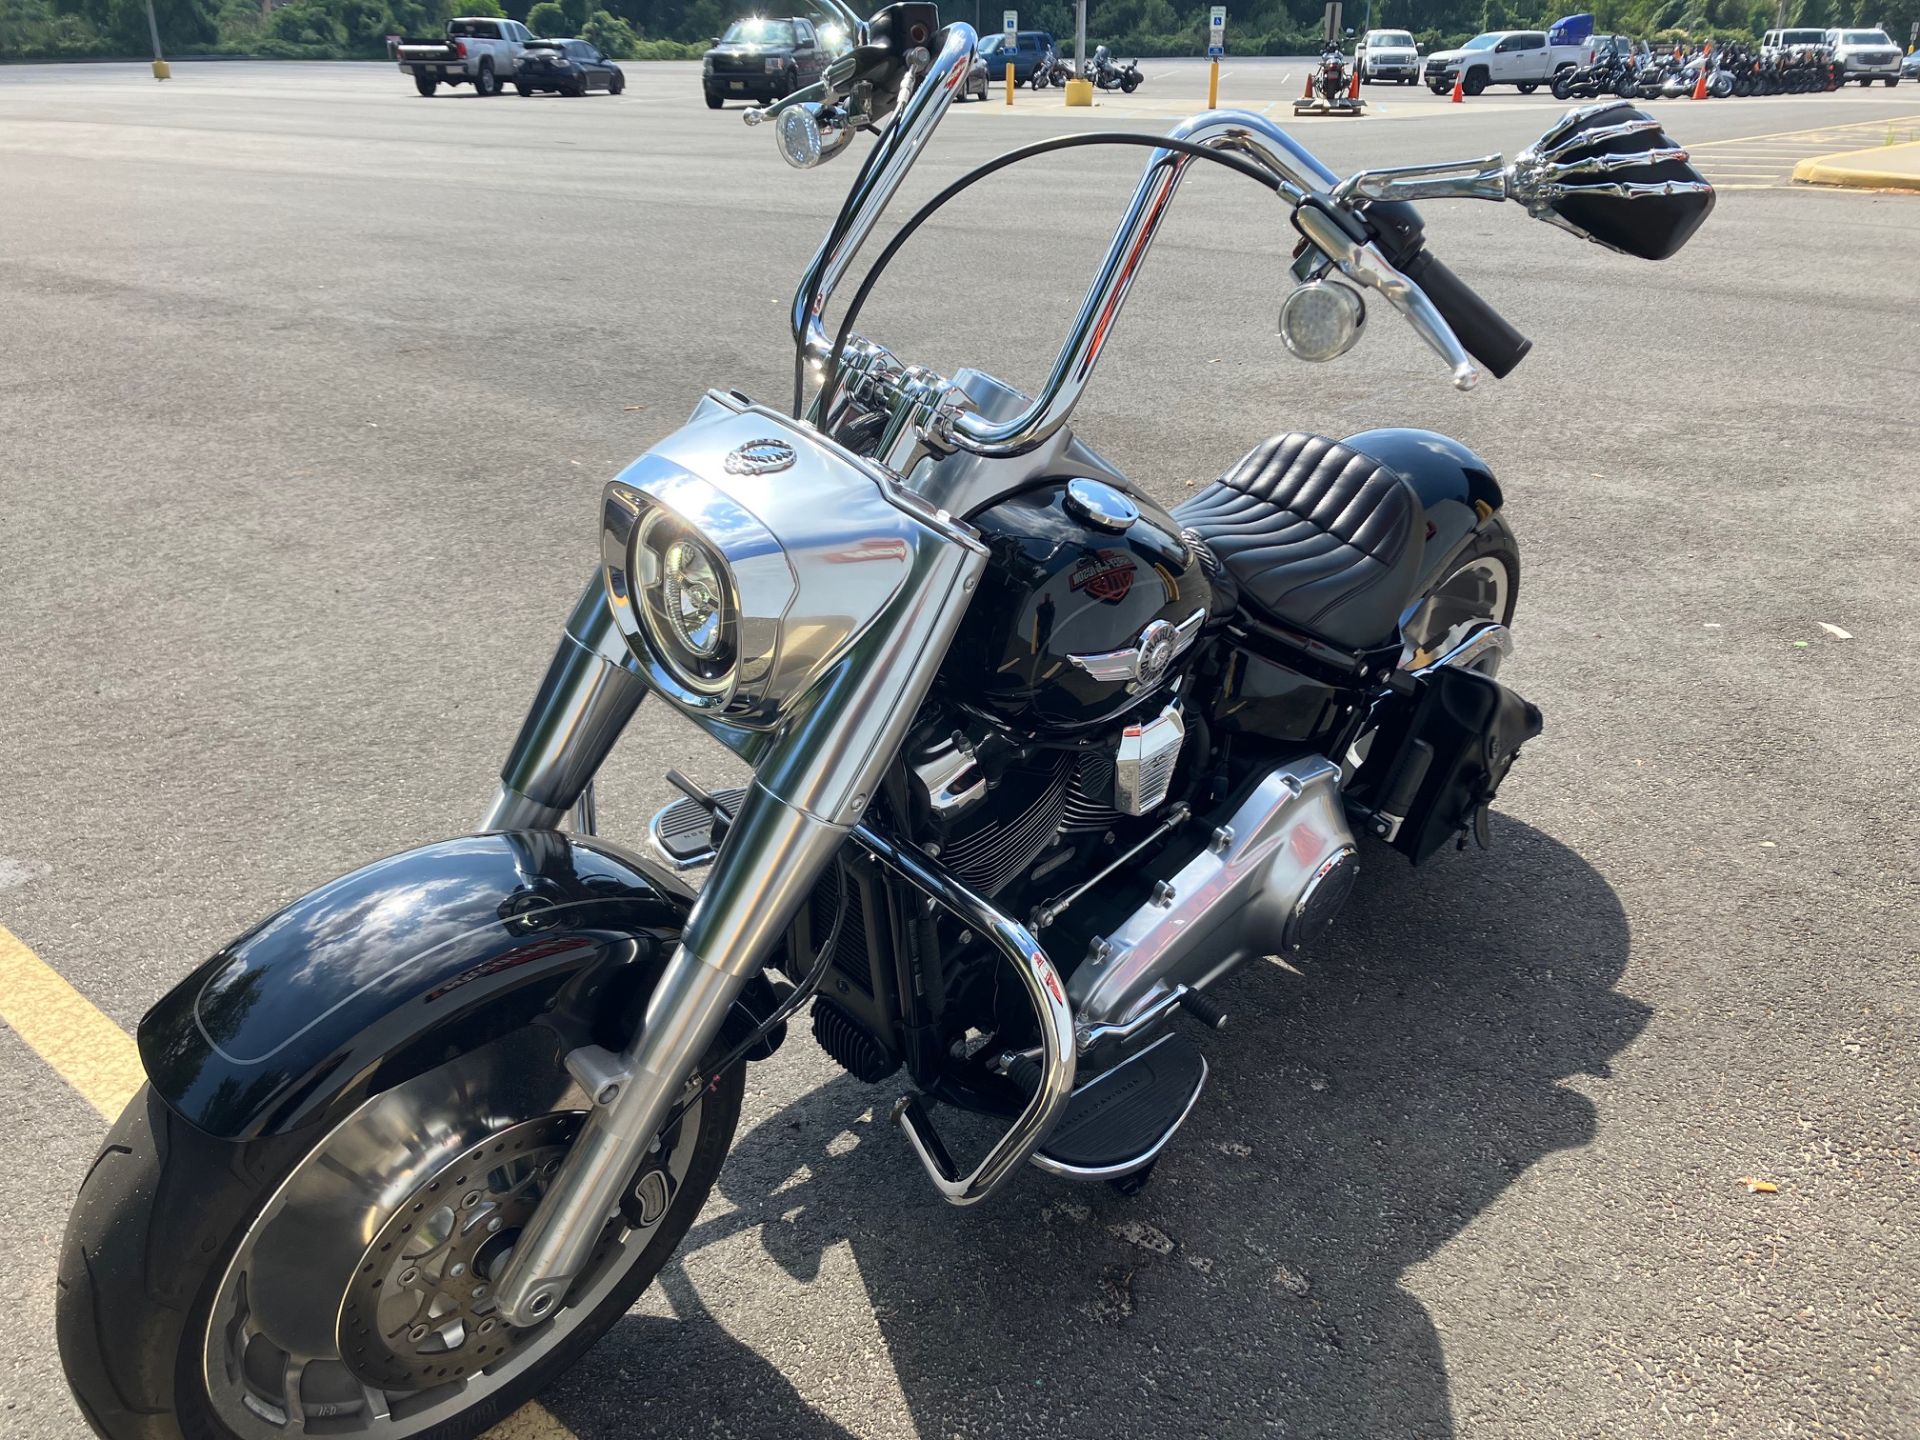 2020 Harley-Davidson FAT BOY in West Long Branch, New Jersey - Photo 4